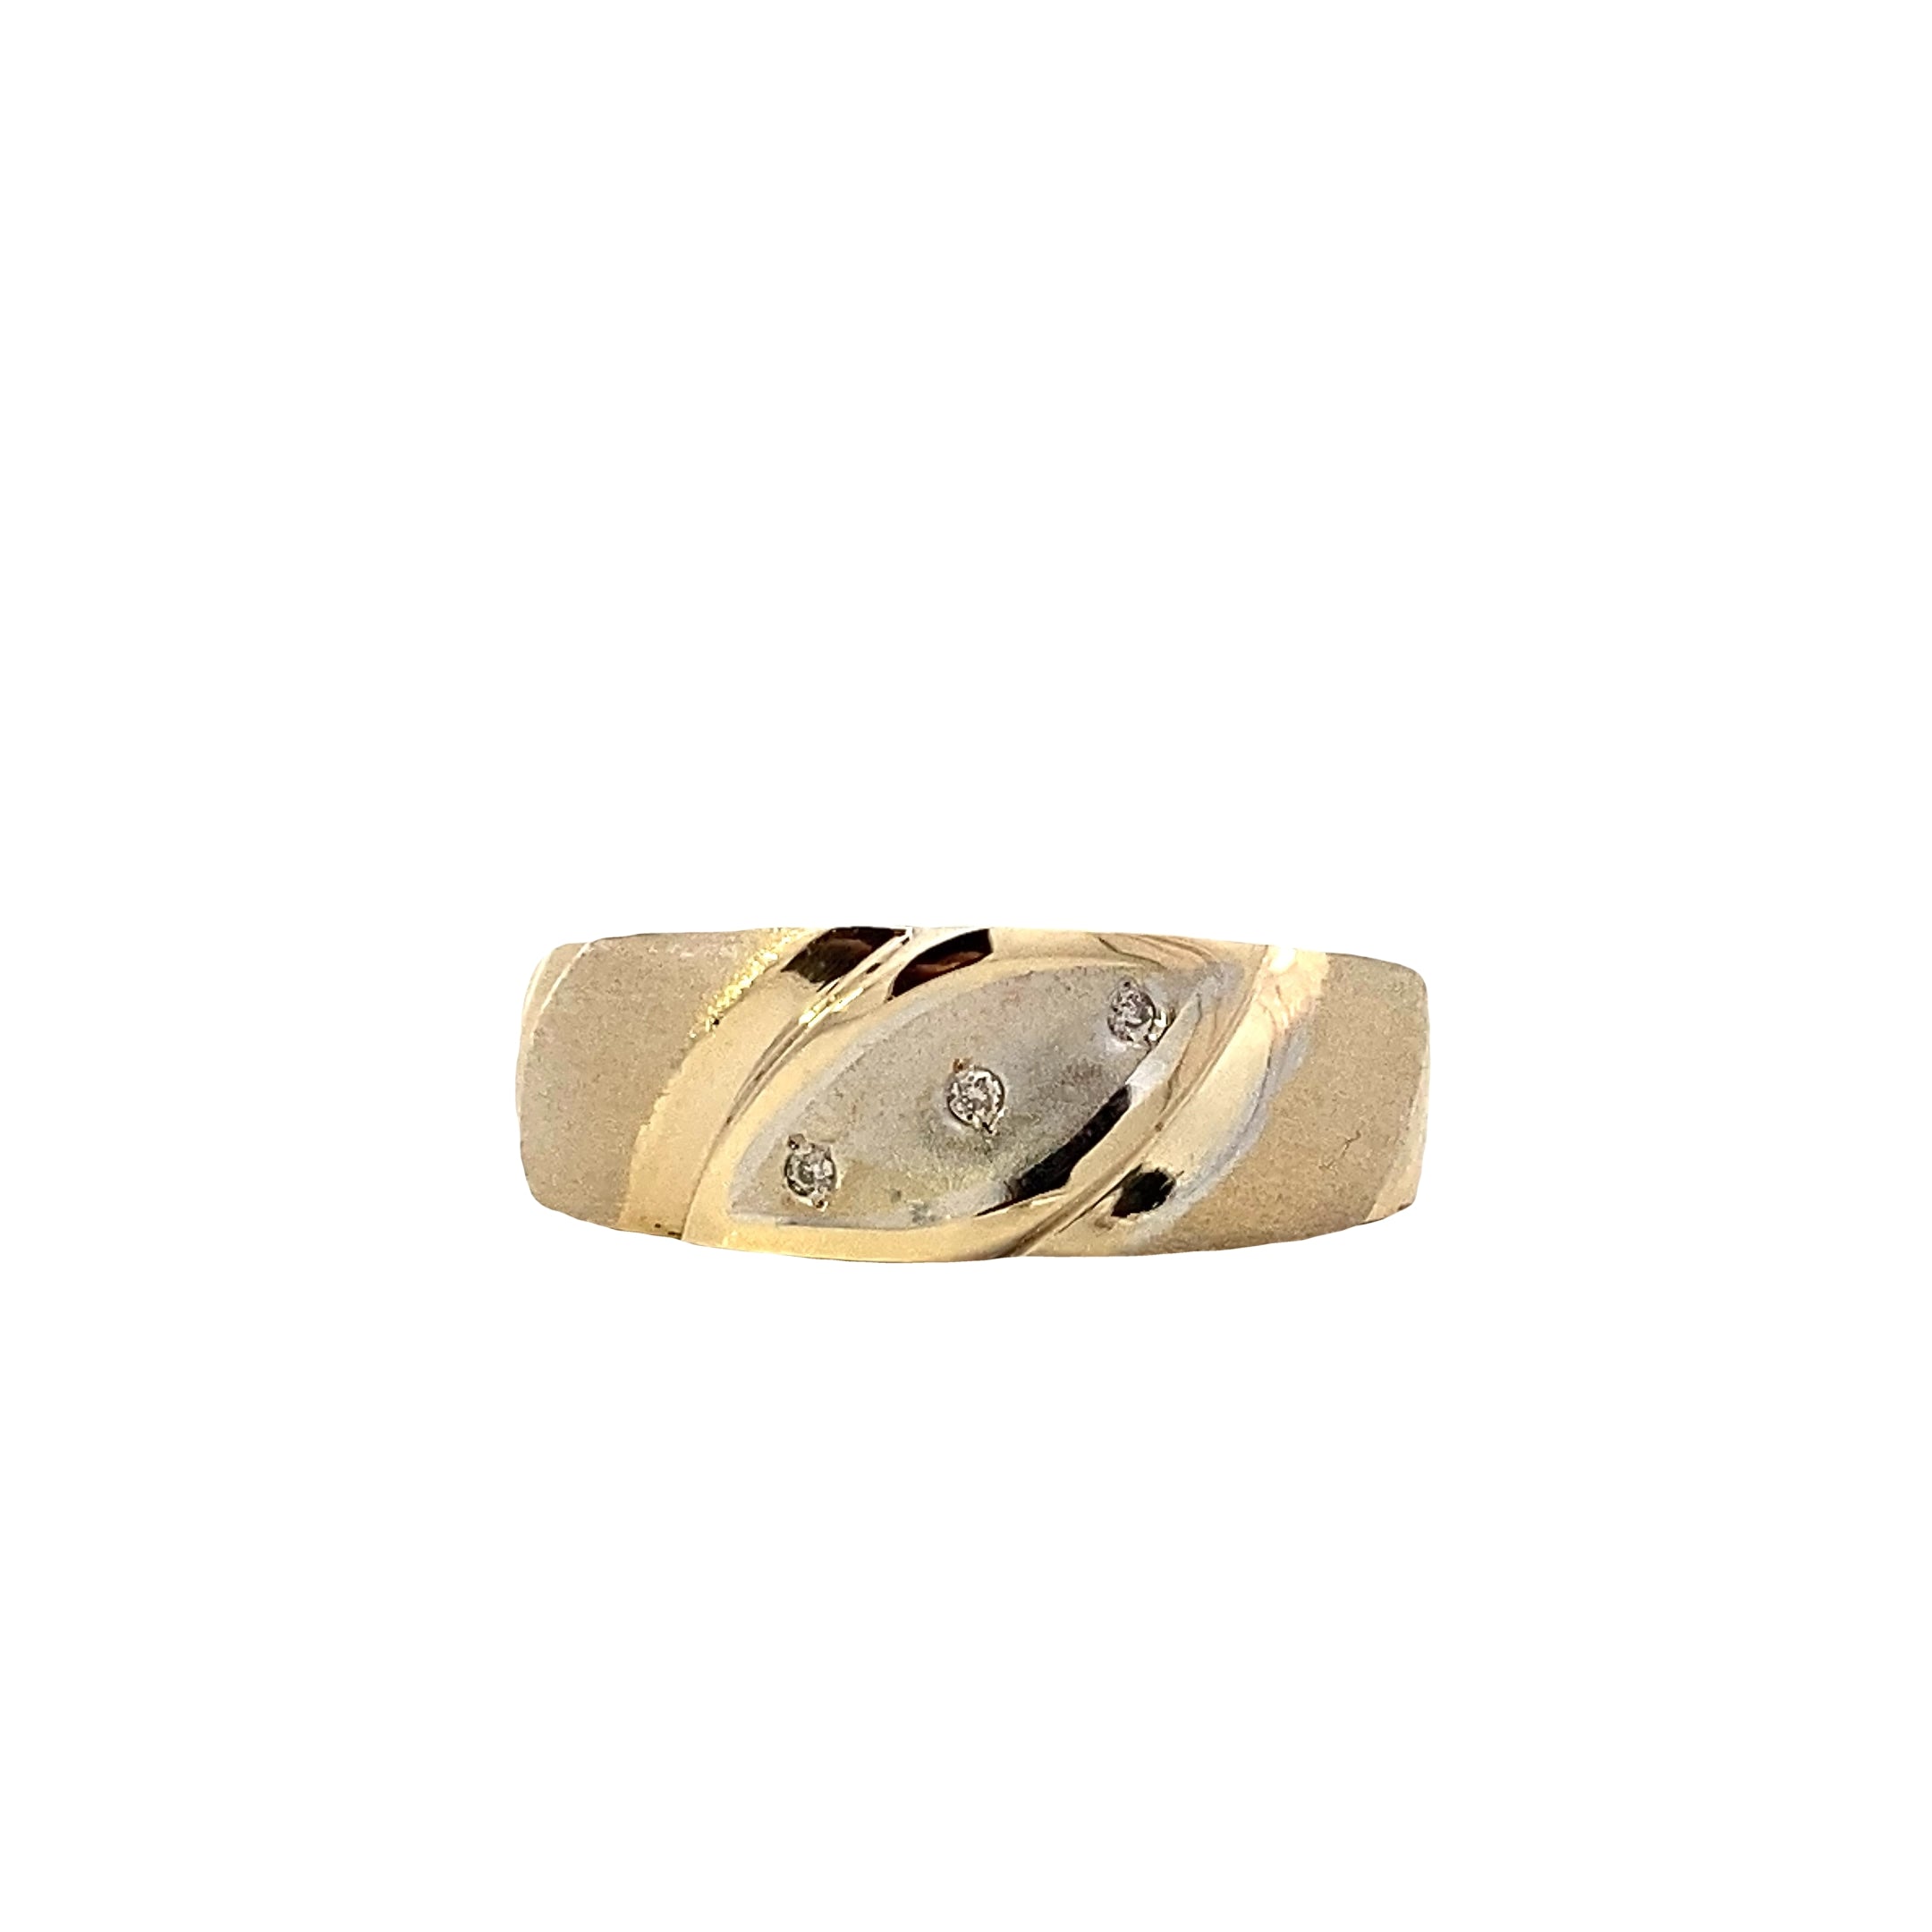 14K Yellow & White Gold Men's Diamond Ring - 0.02ct